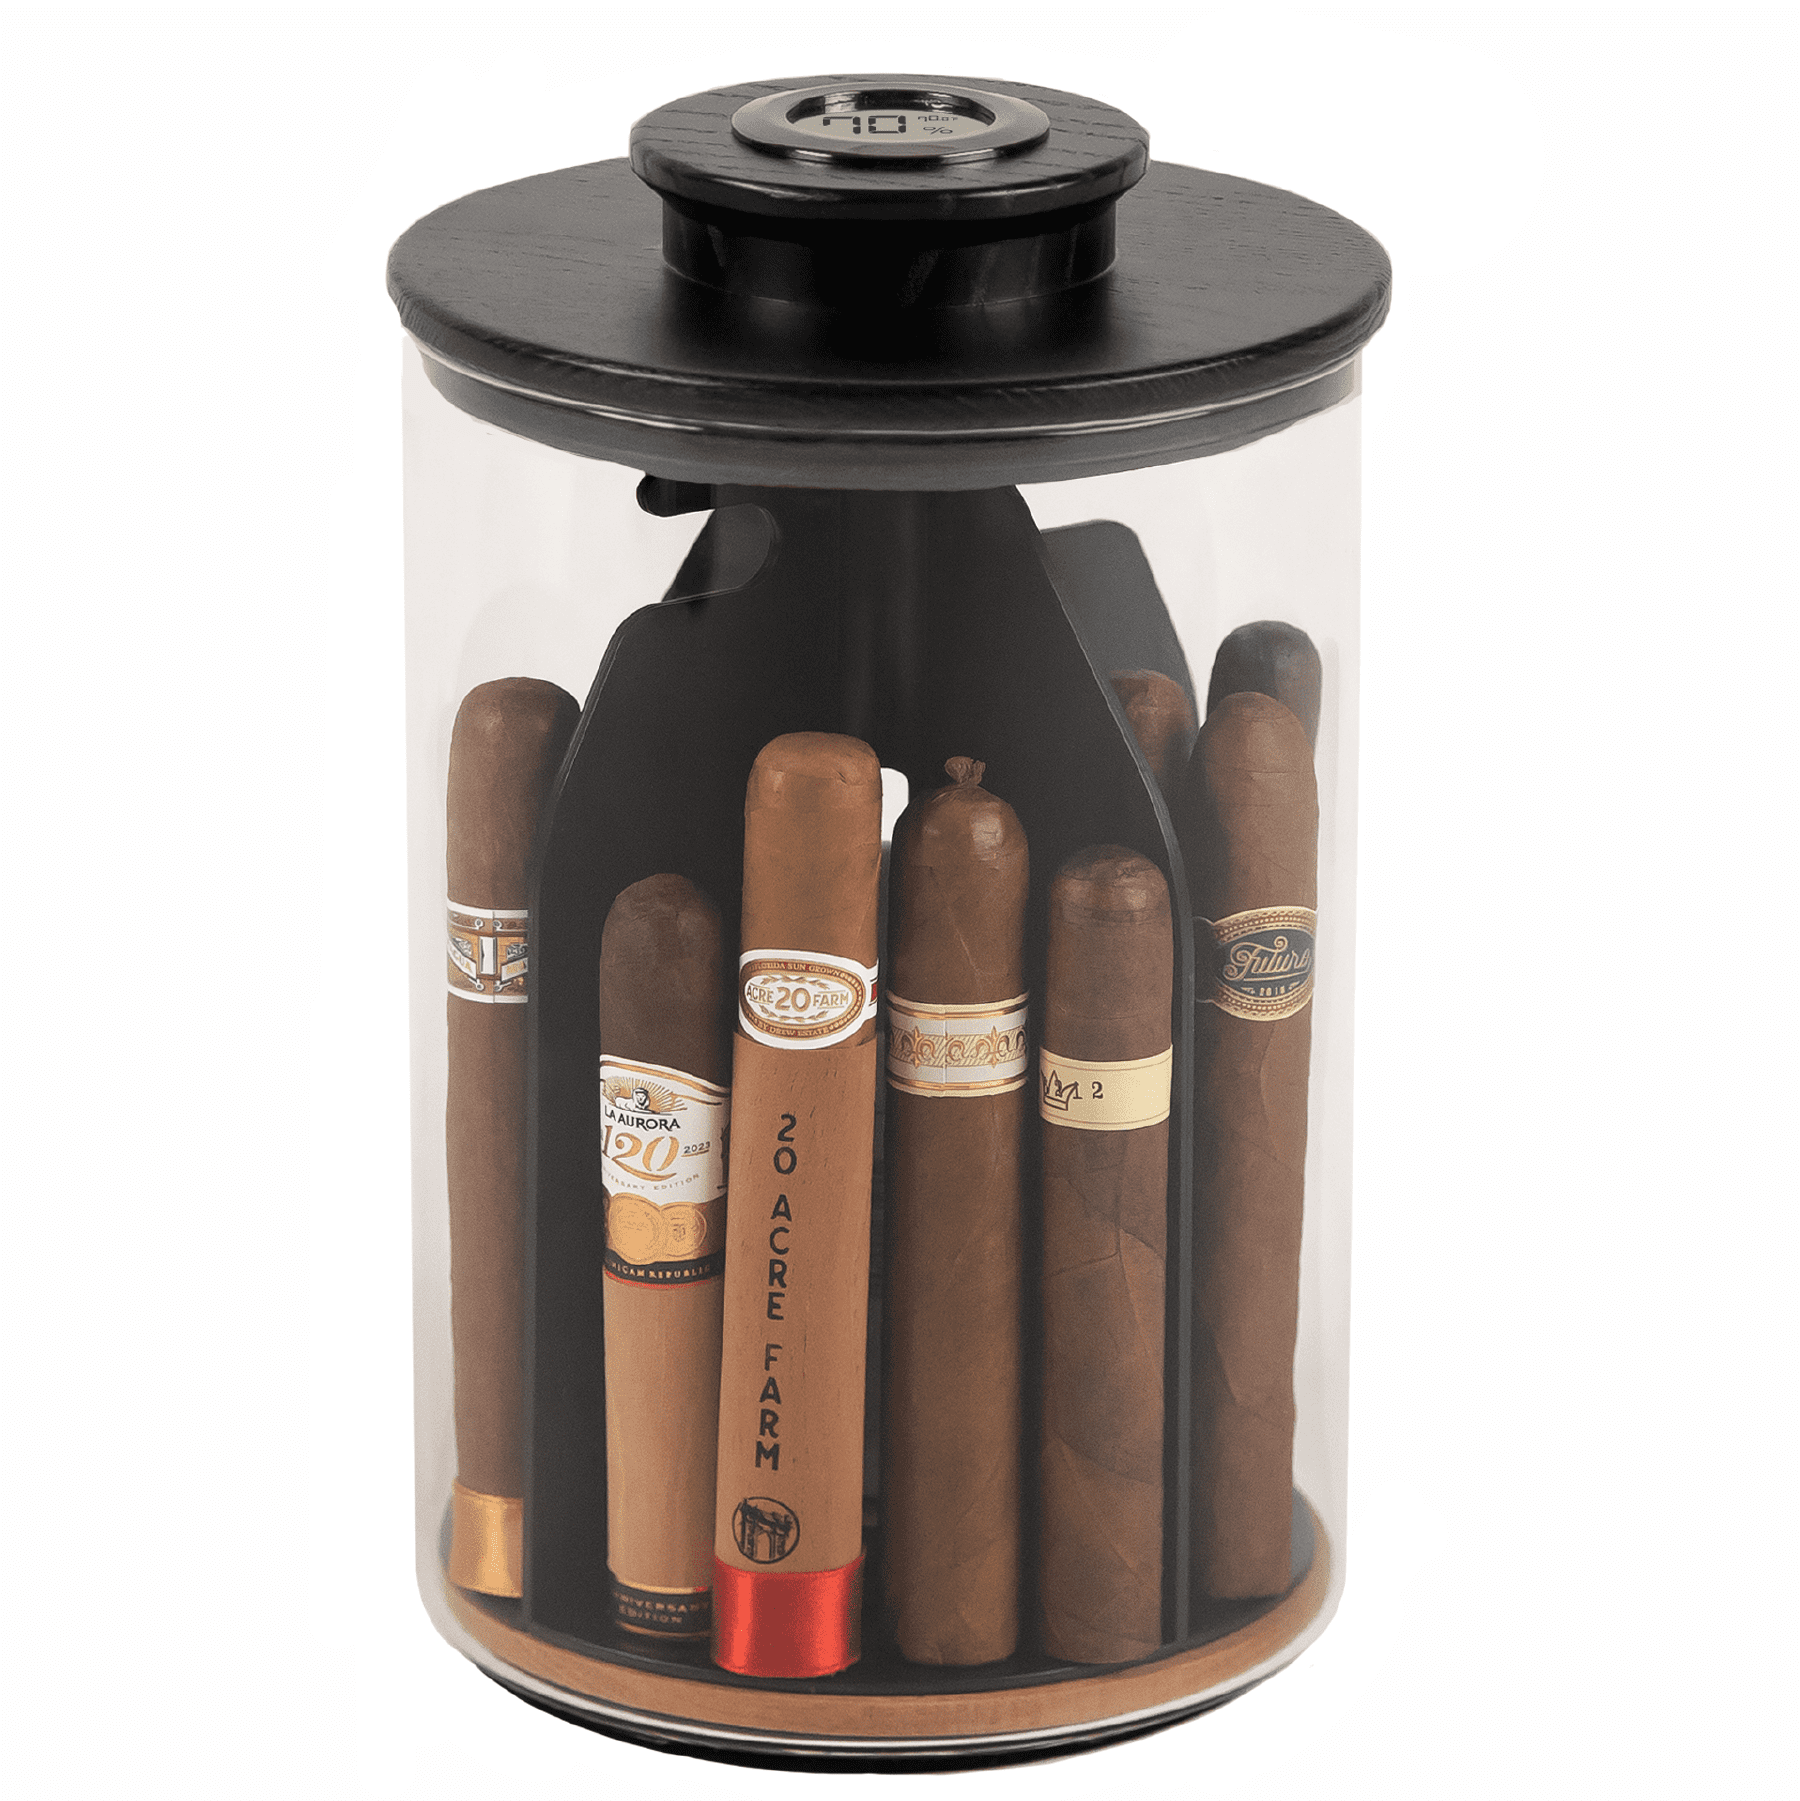 how to use travel cigar humidor